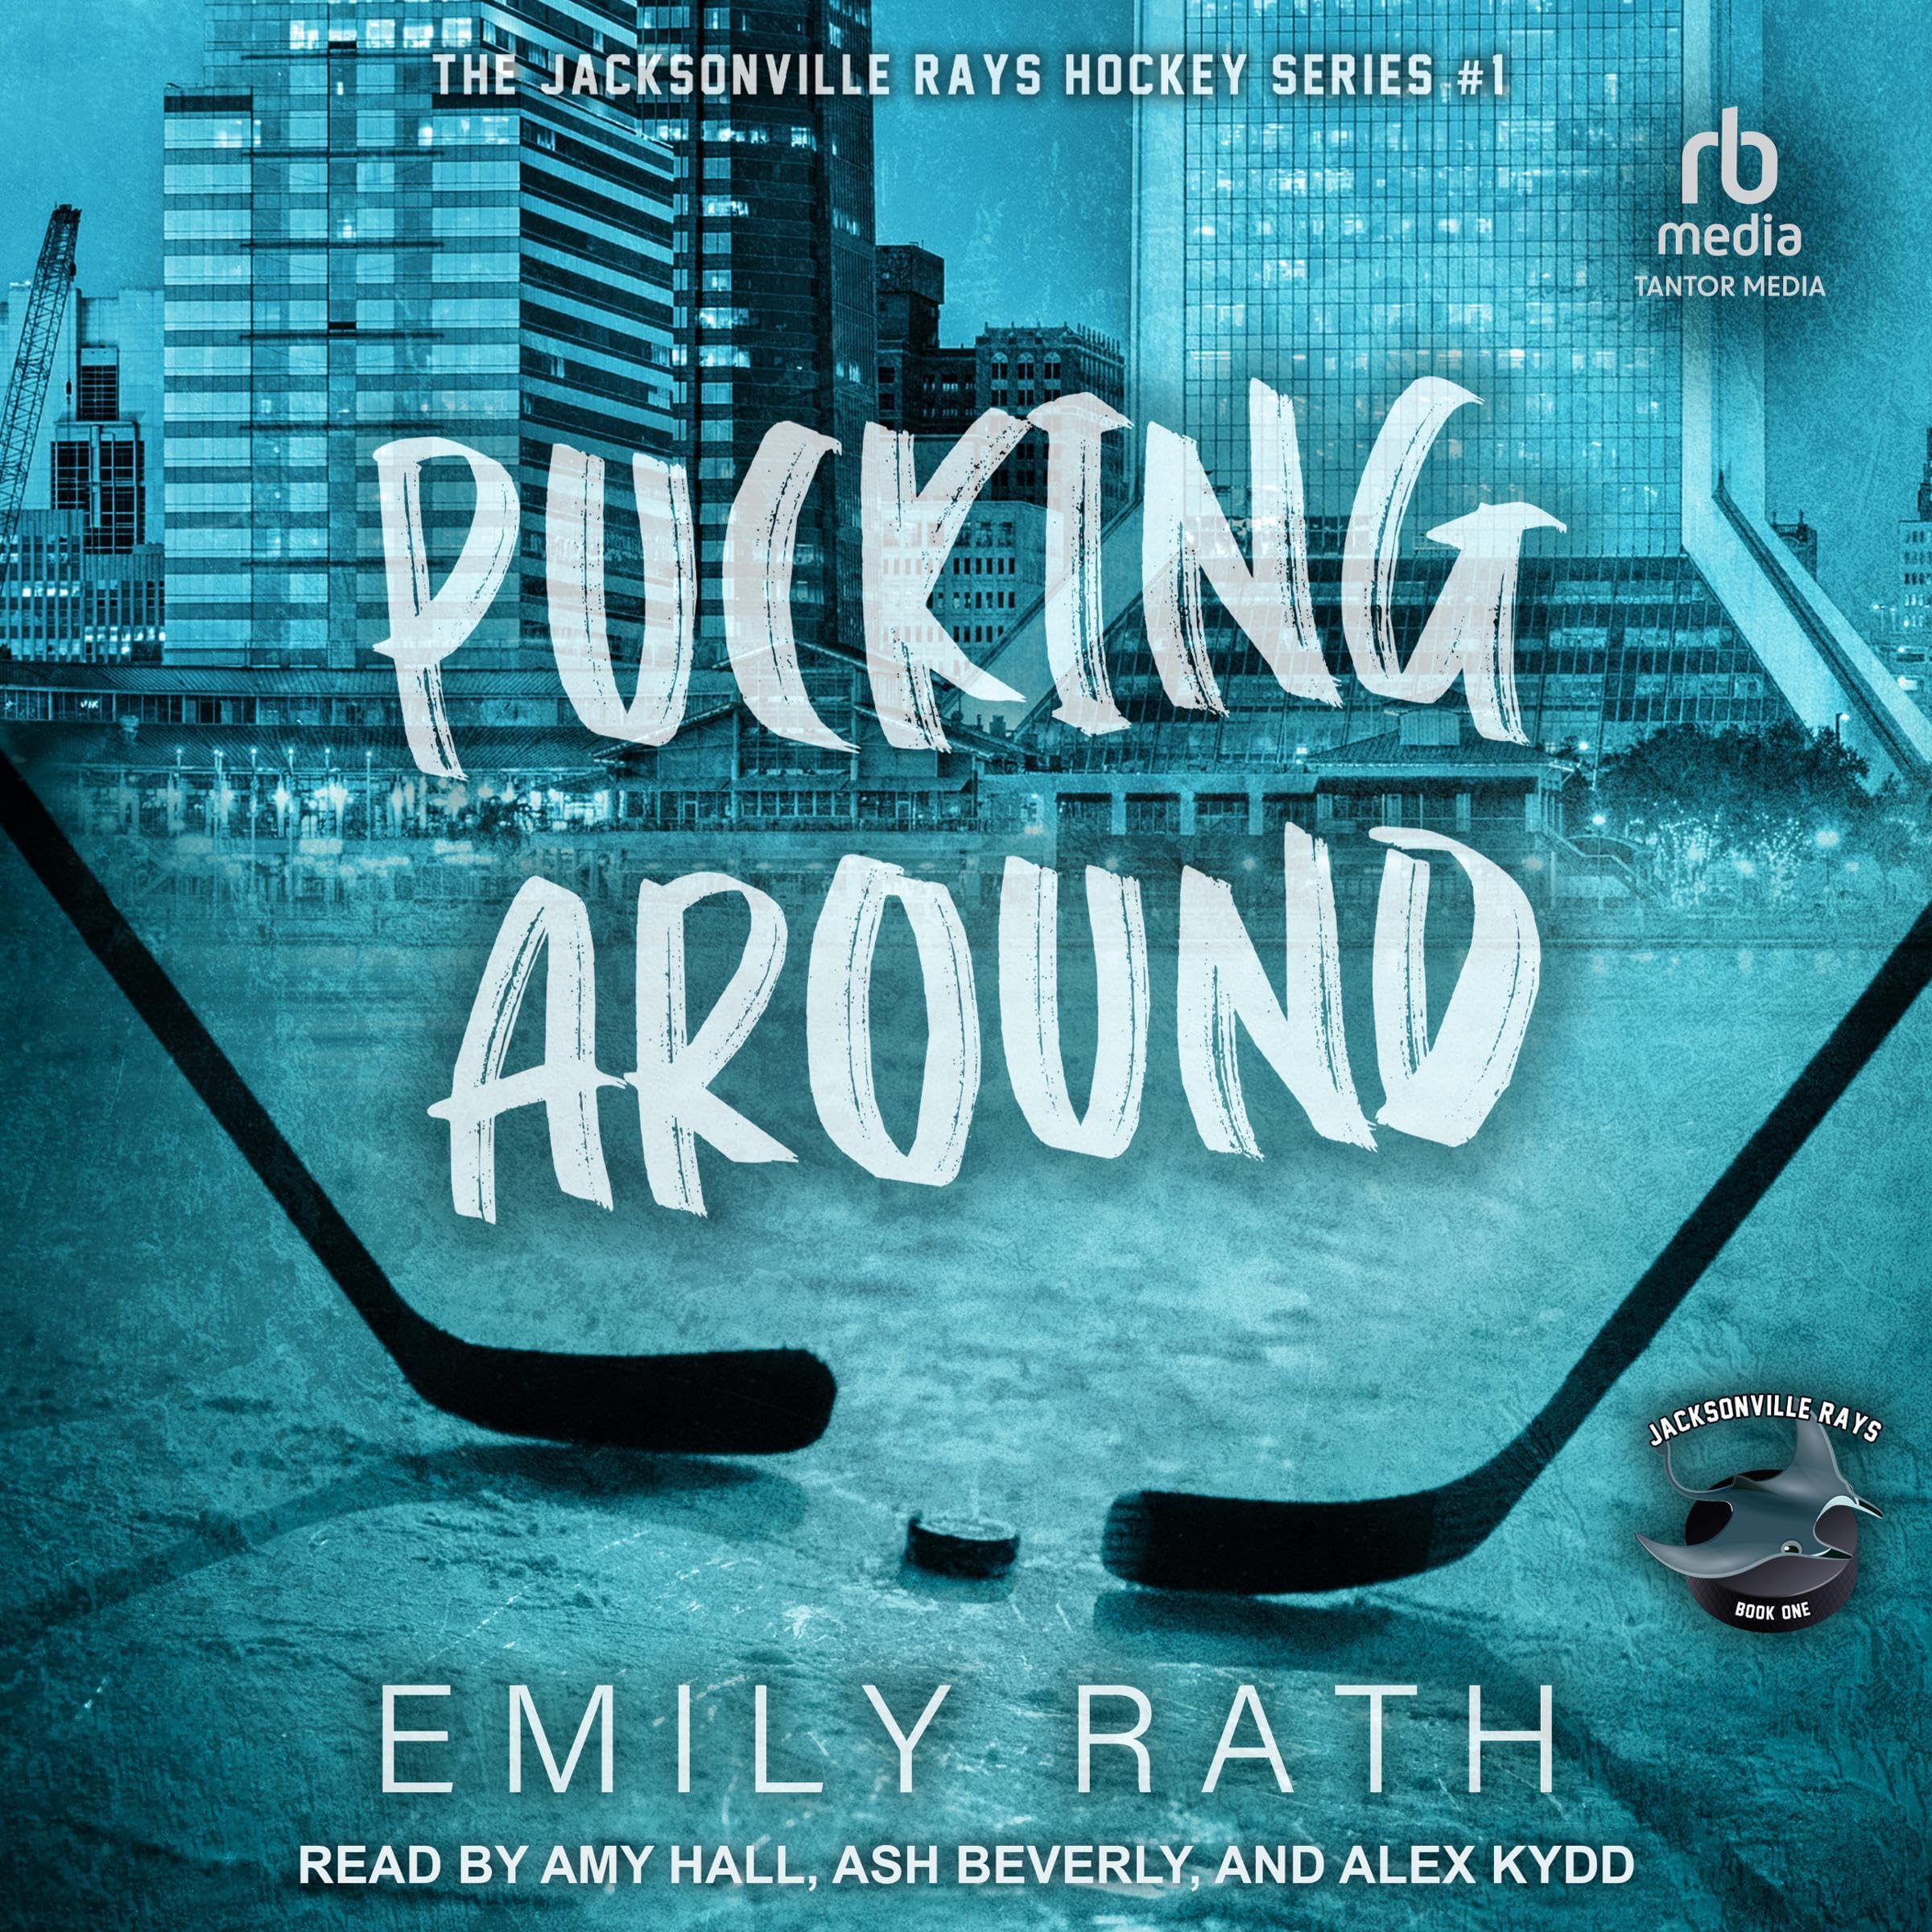 Pucking Around: A Why Choose Hockey Romance (Jacksonville Rays, Book 1)